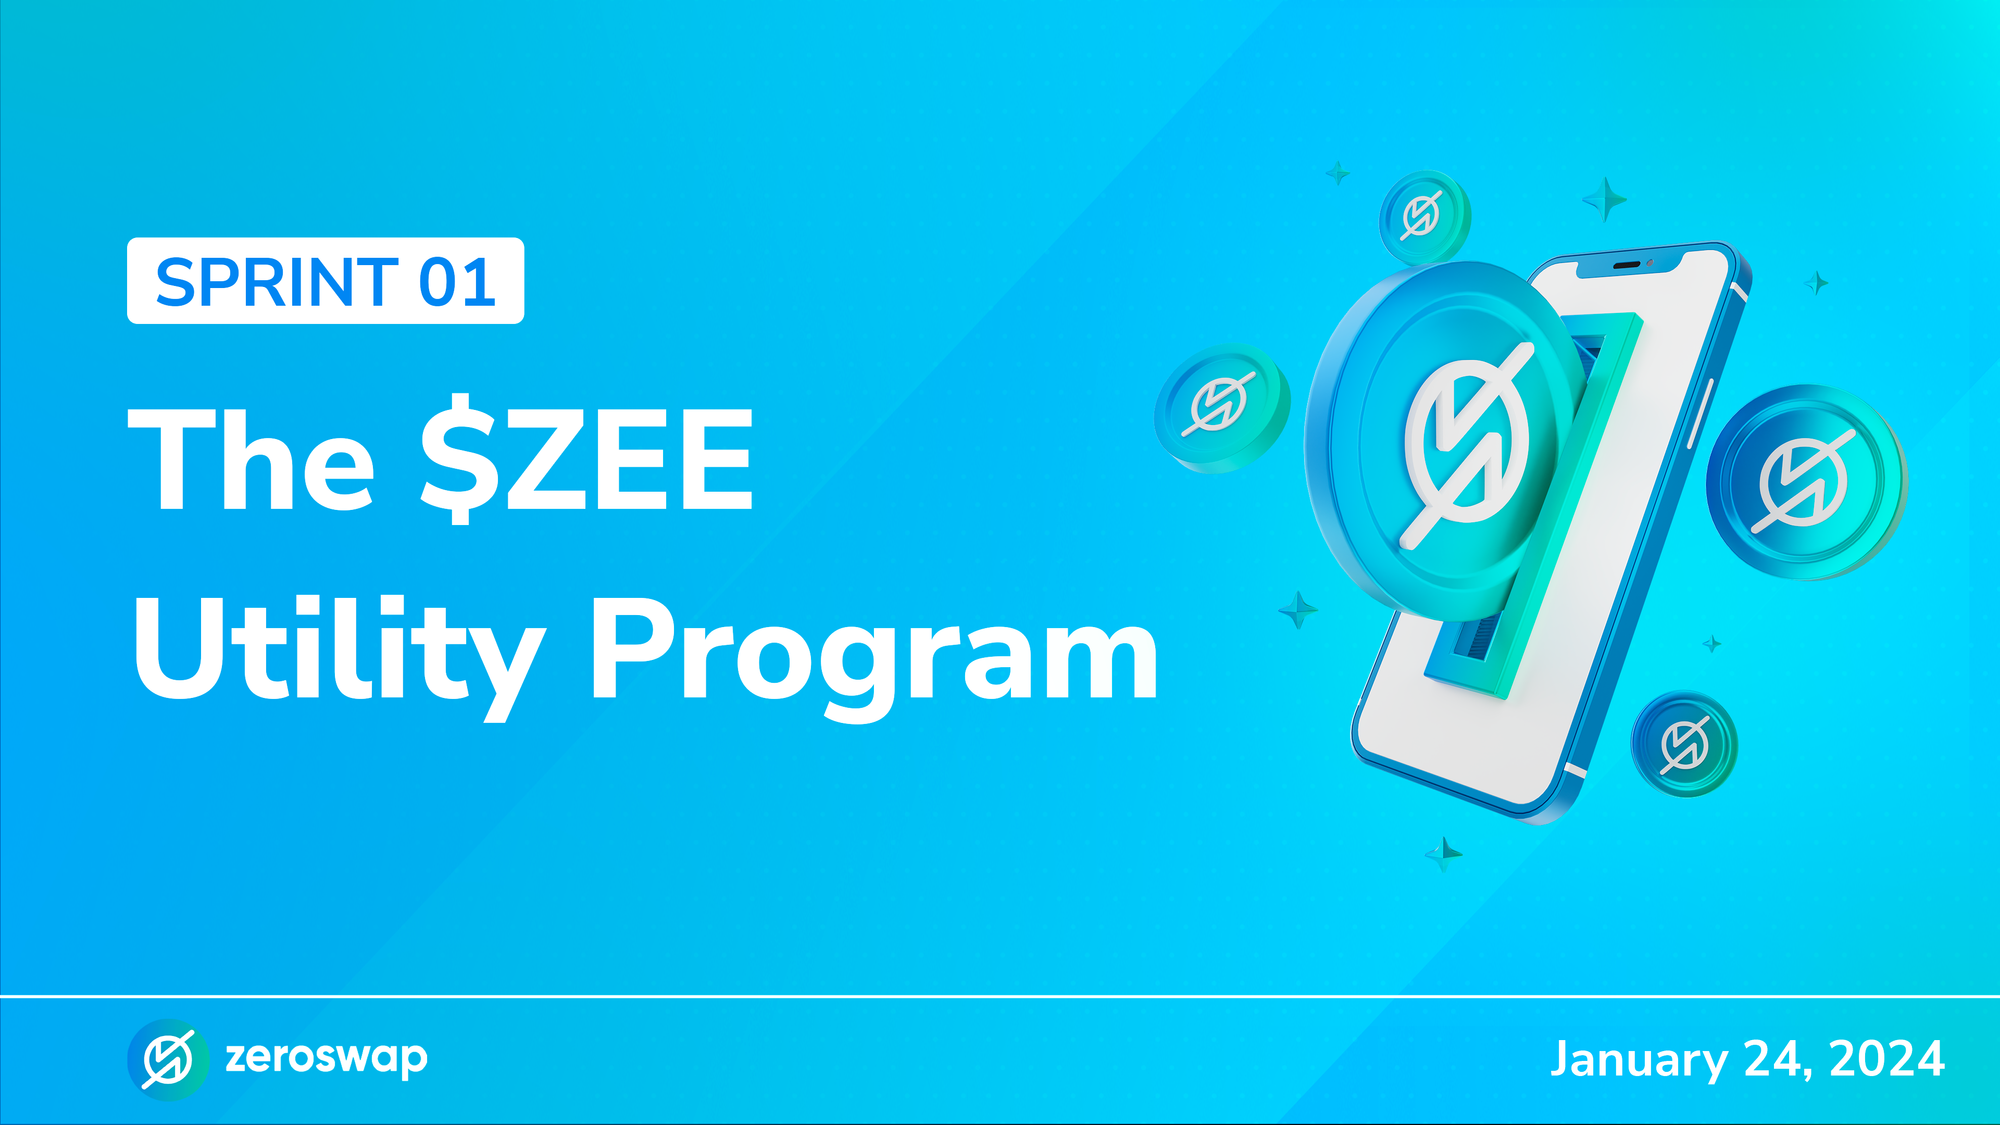 Introducing Sprint 01—The $ZEE Utility Program